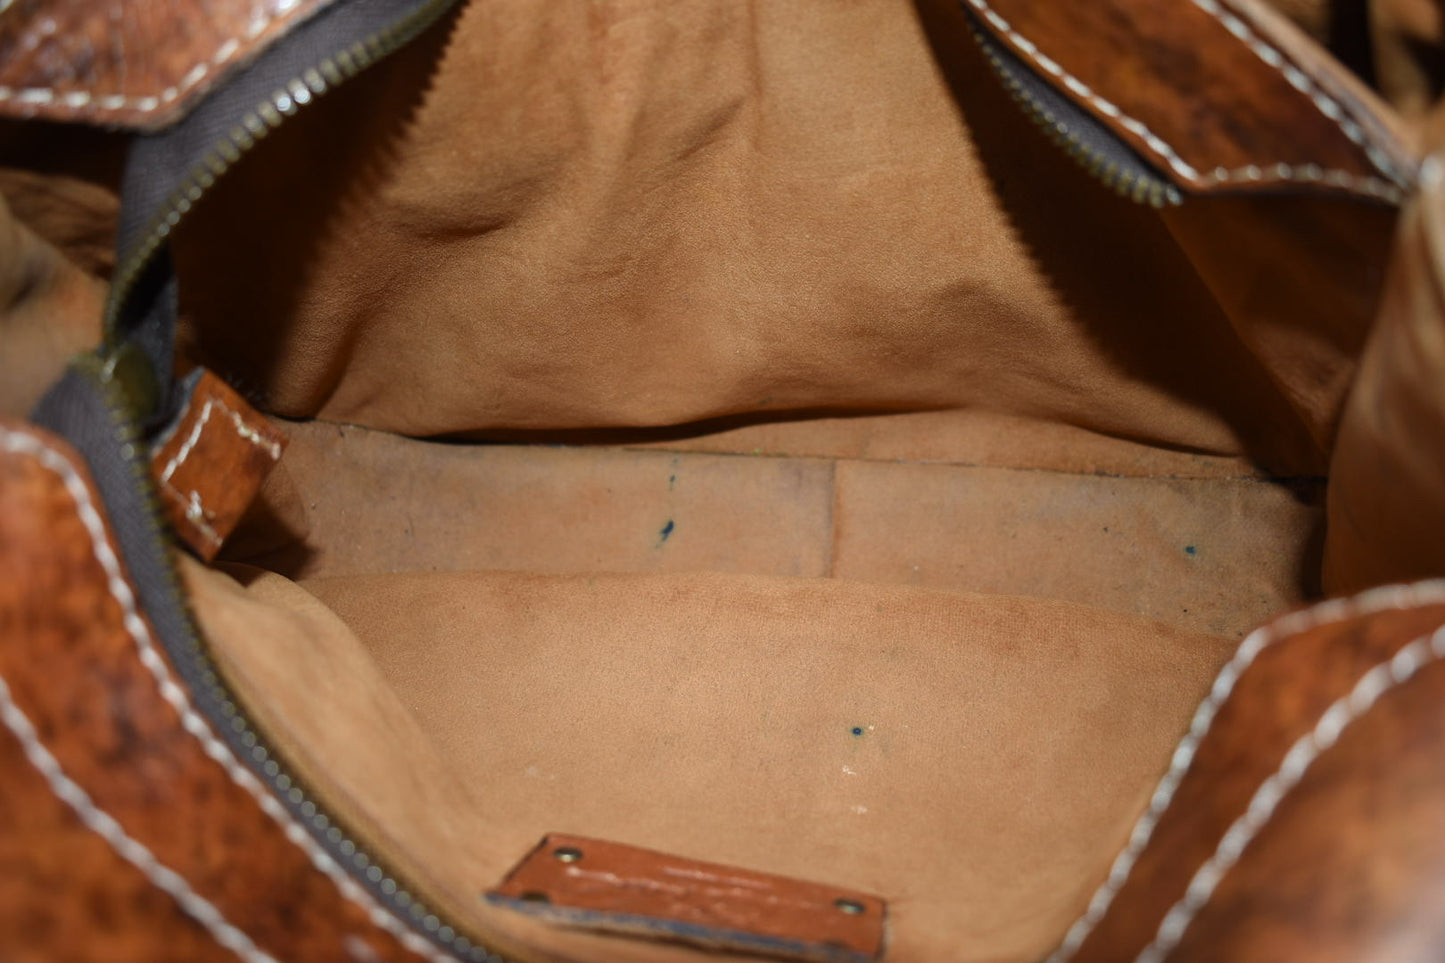 Patricia Nash London Saddle Bag in Tuscan Tooled Leather